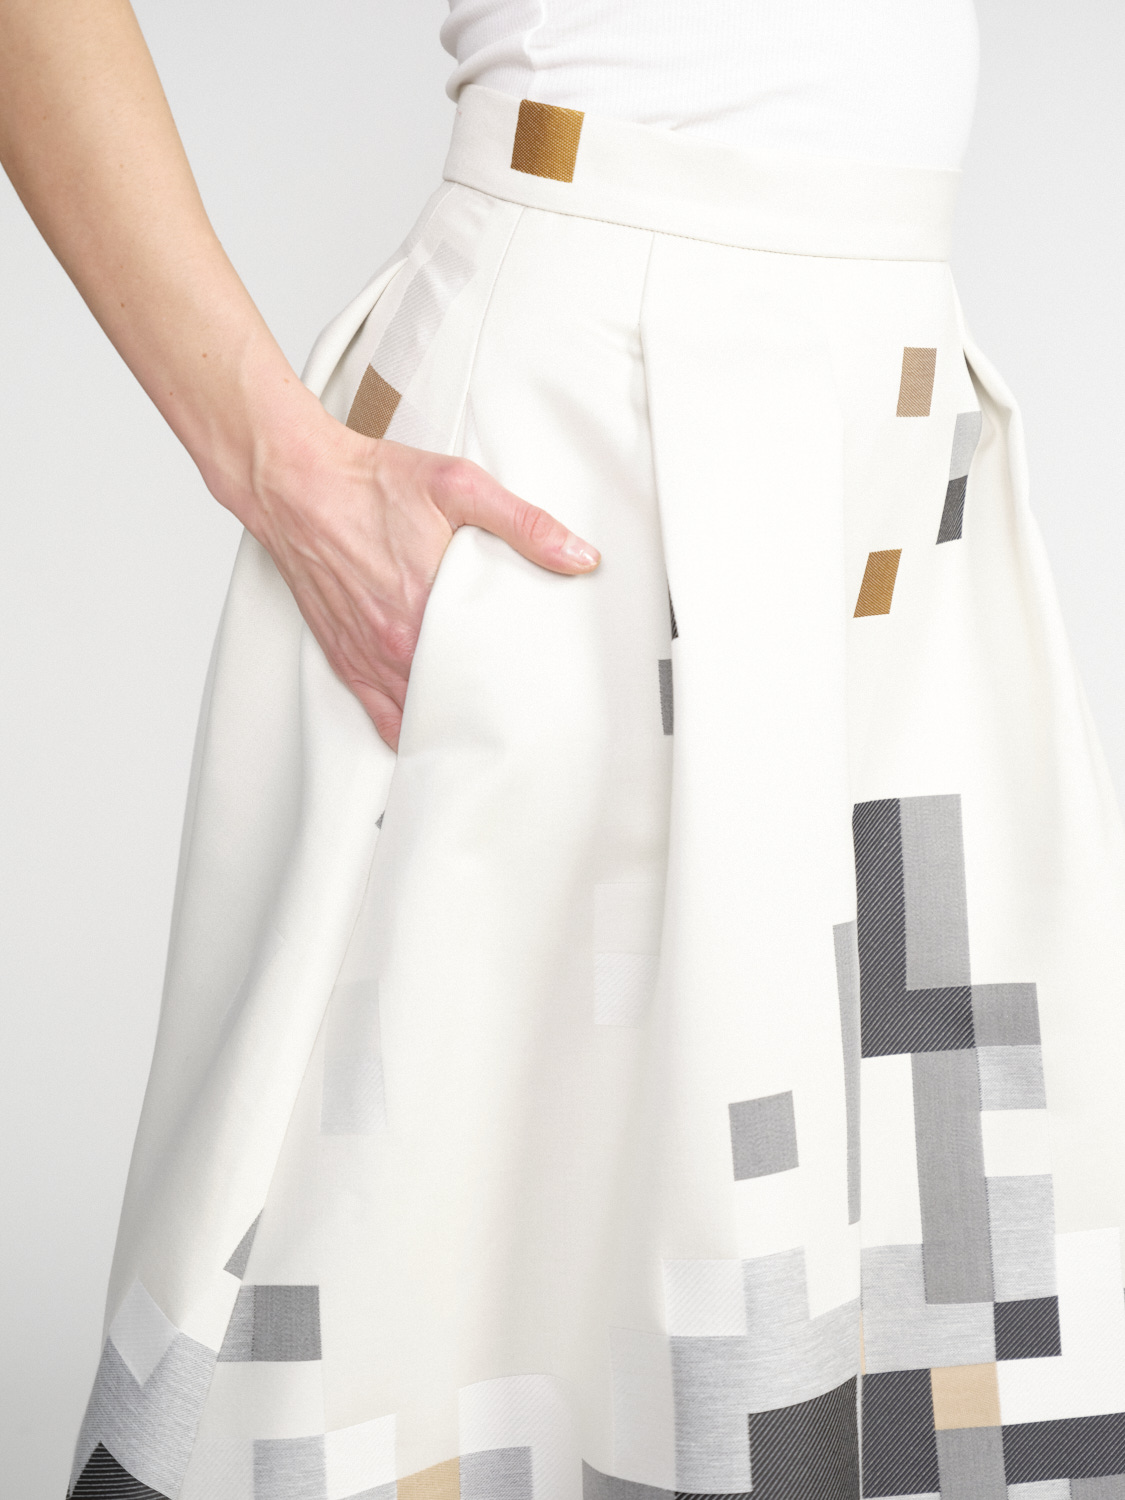 Antonia Zander Yacy flared skirt with graphic pattern  creme M